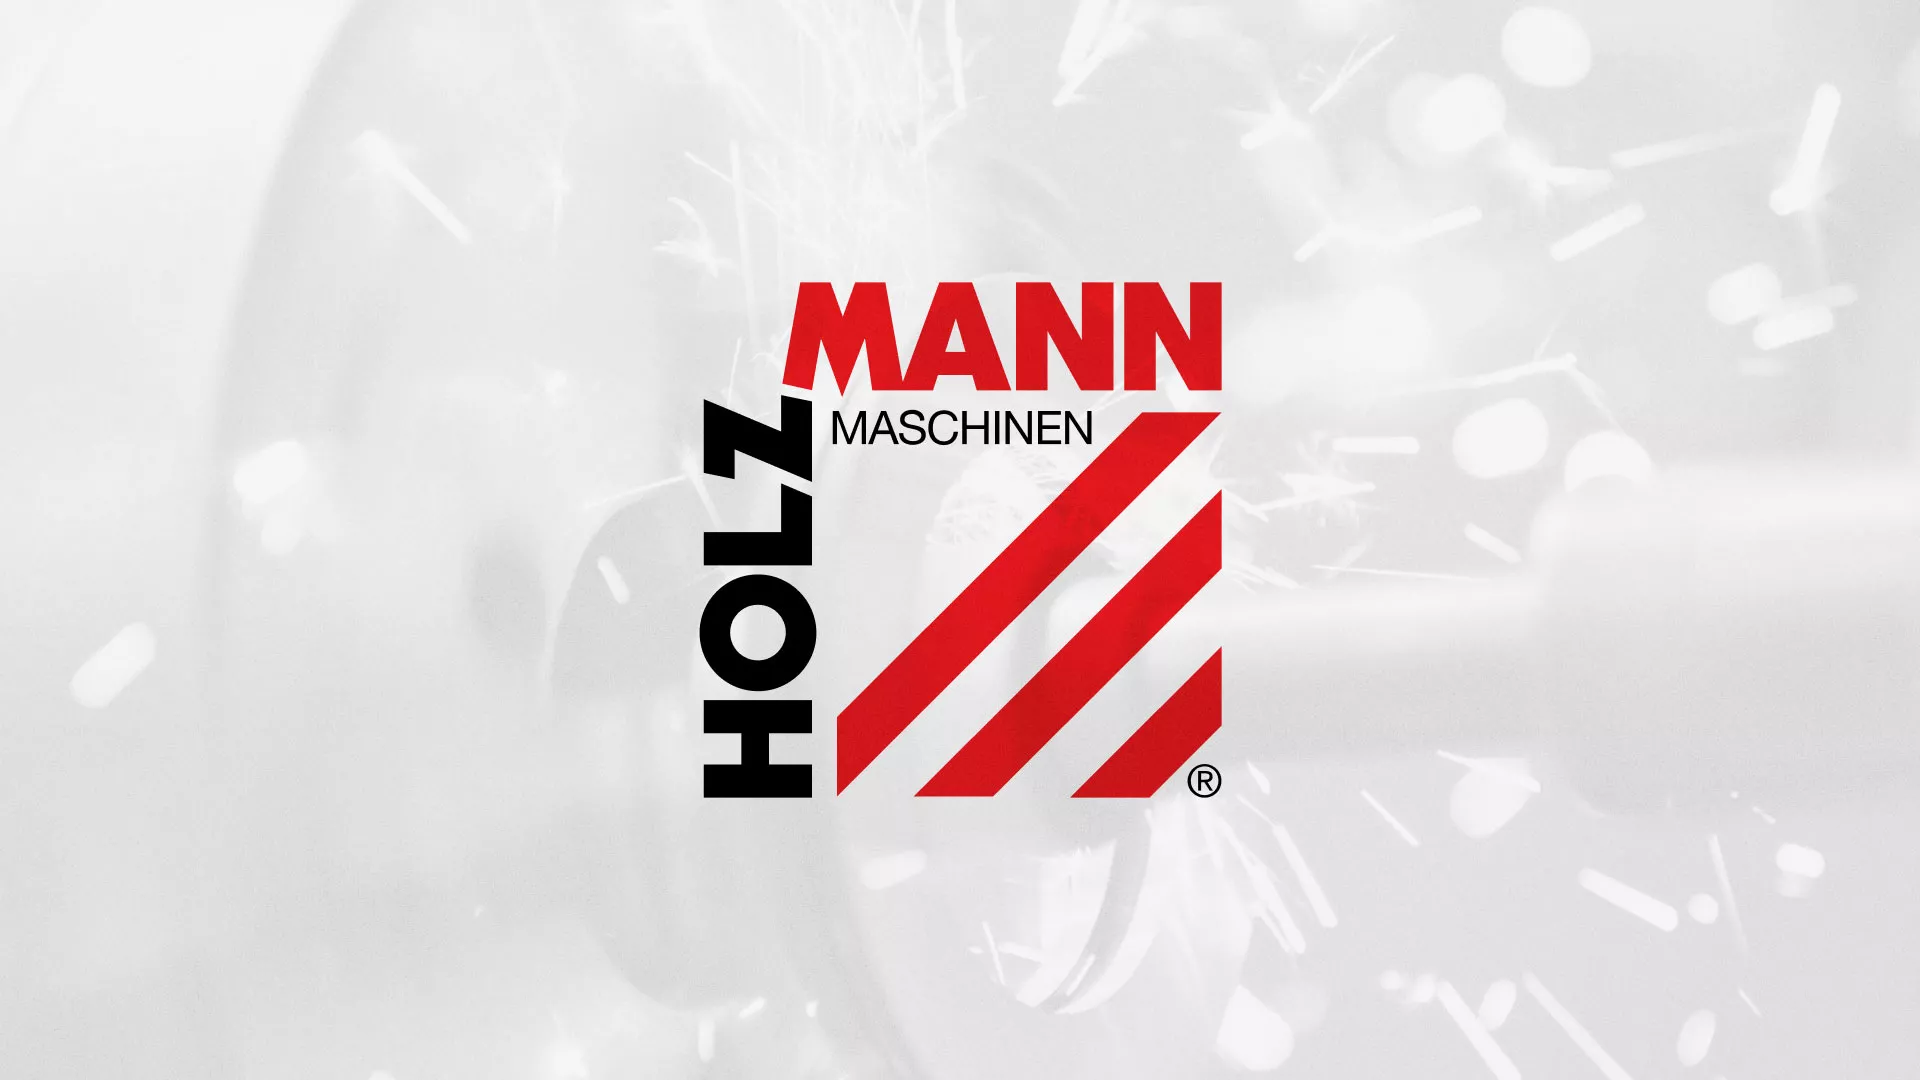 Создание сайта компании «HOLZMANN Maschinen GmbH» в Рязани